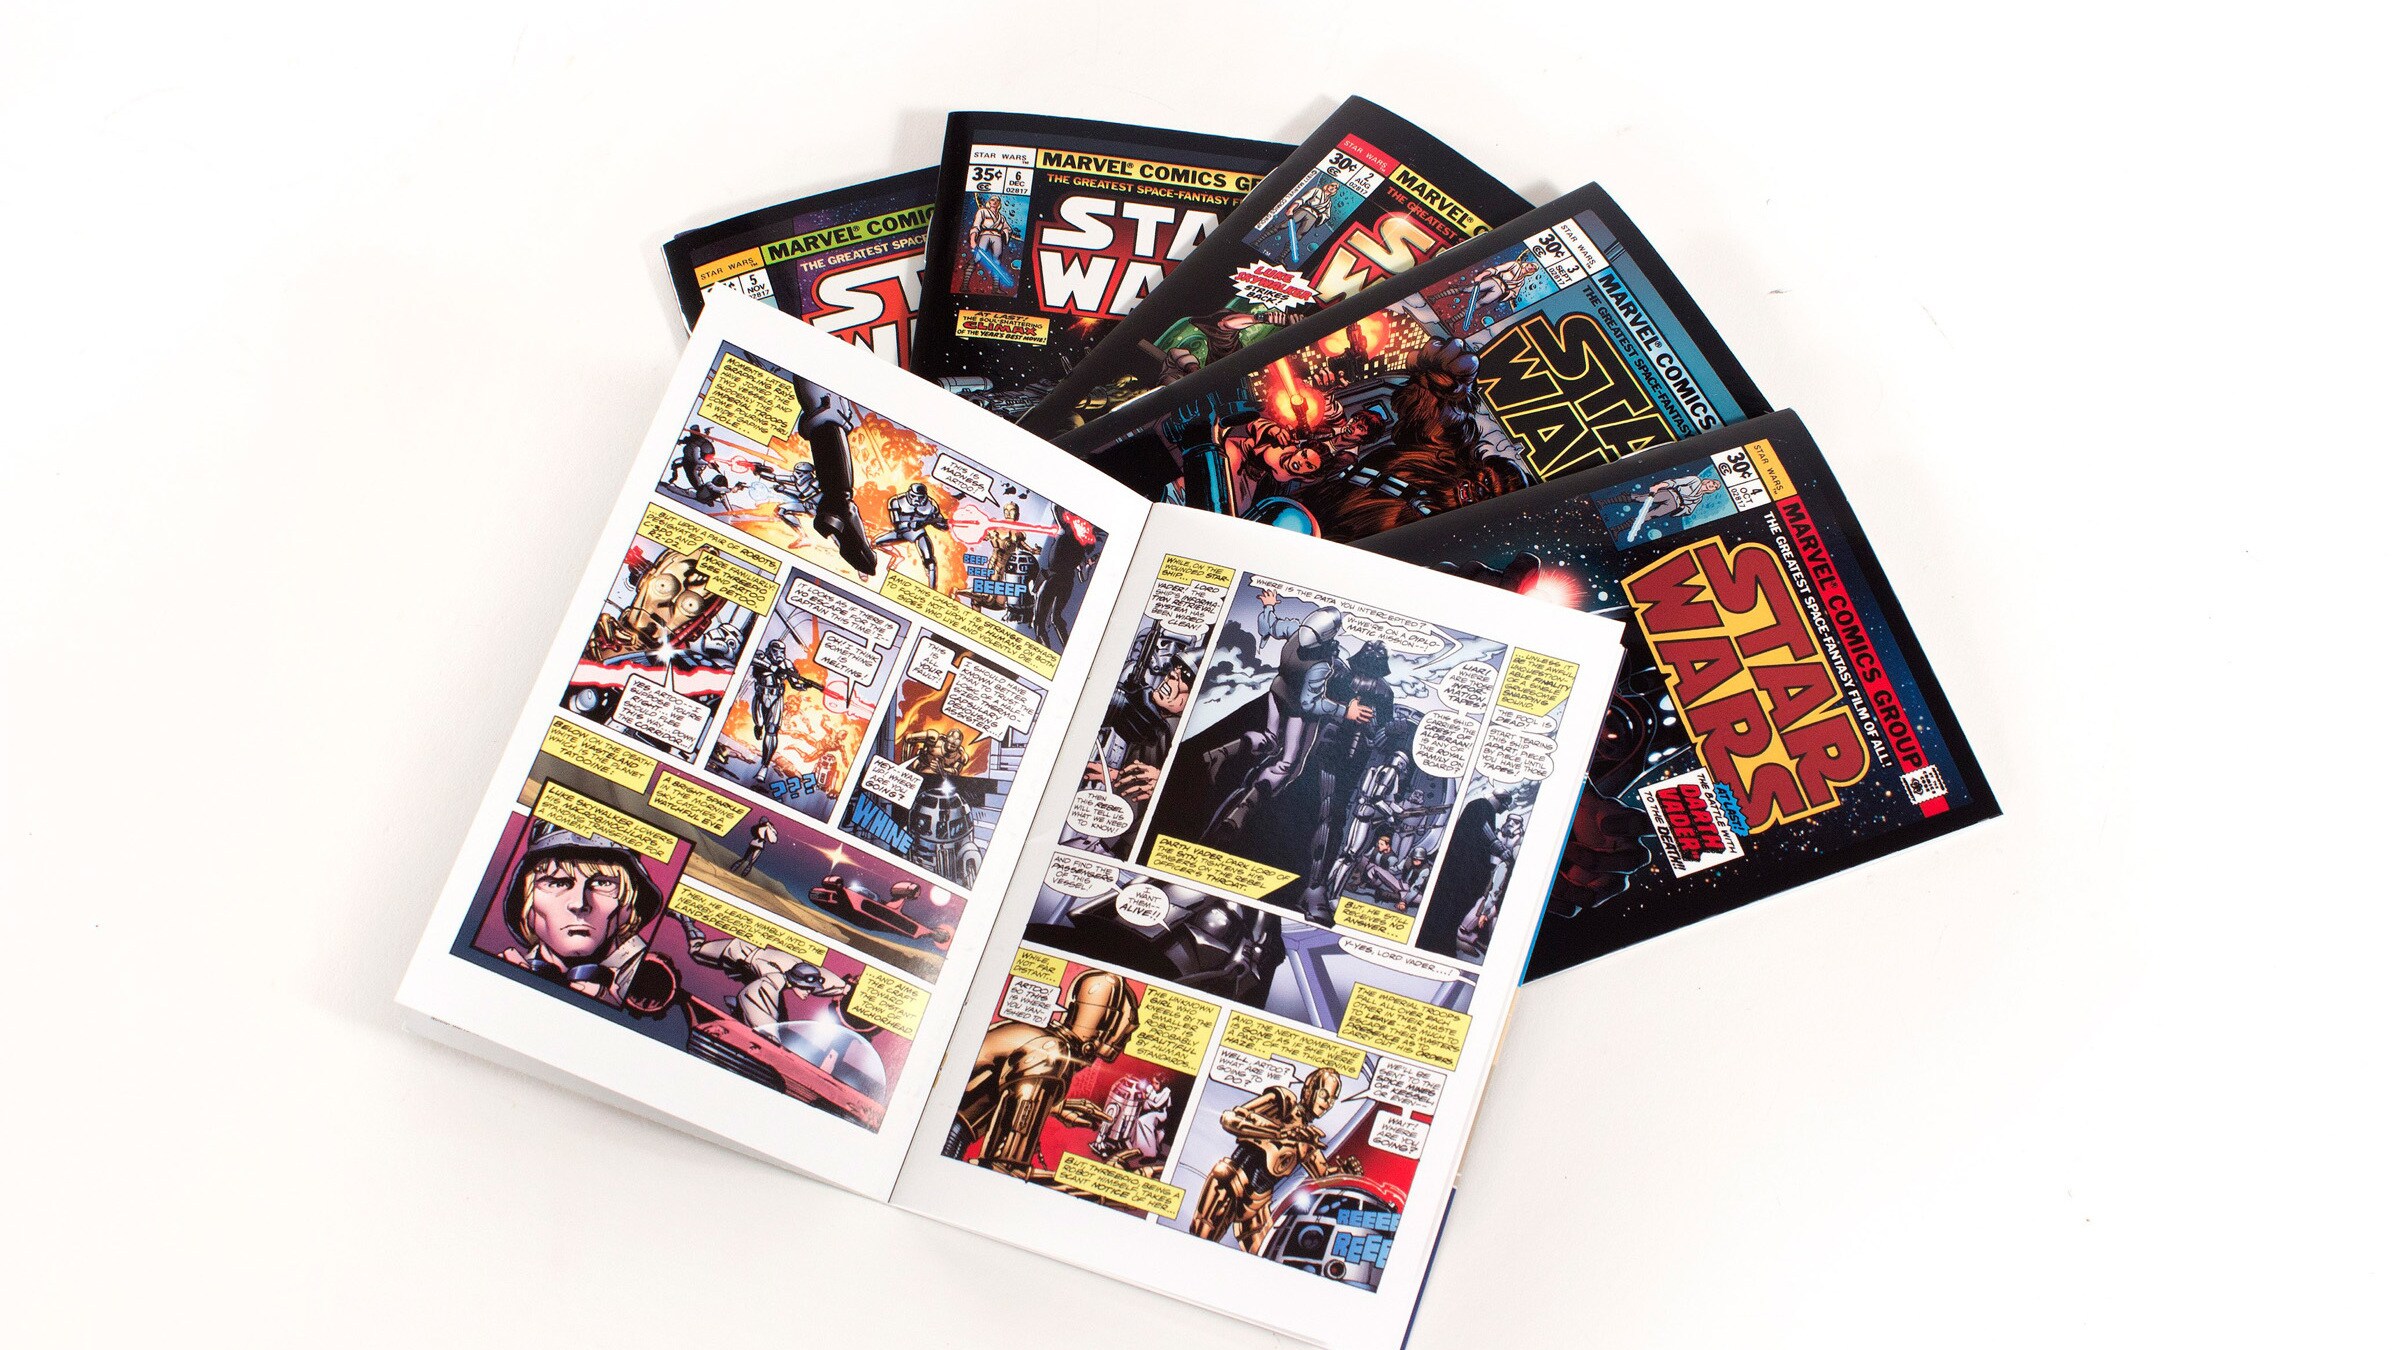 Star Wars Micro Comic Collector Packs